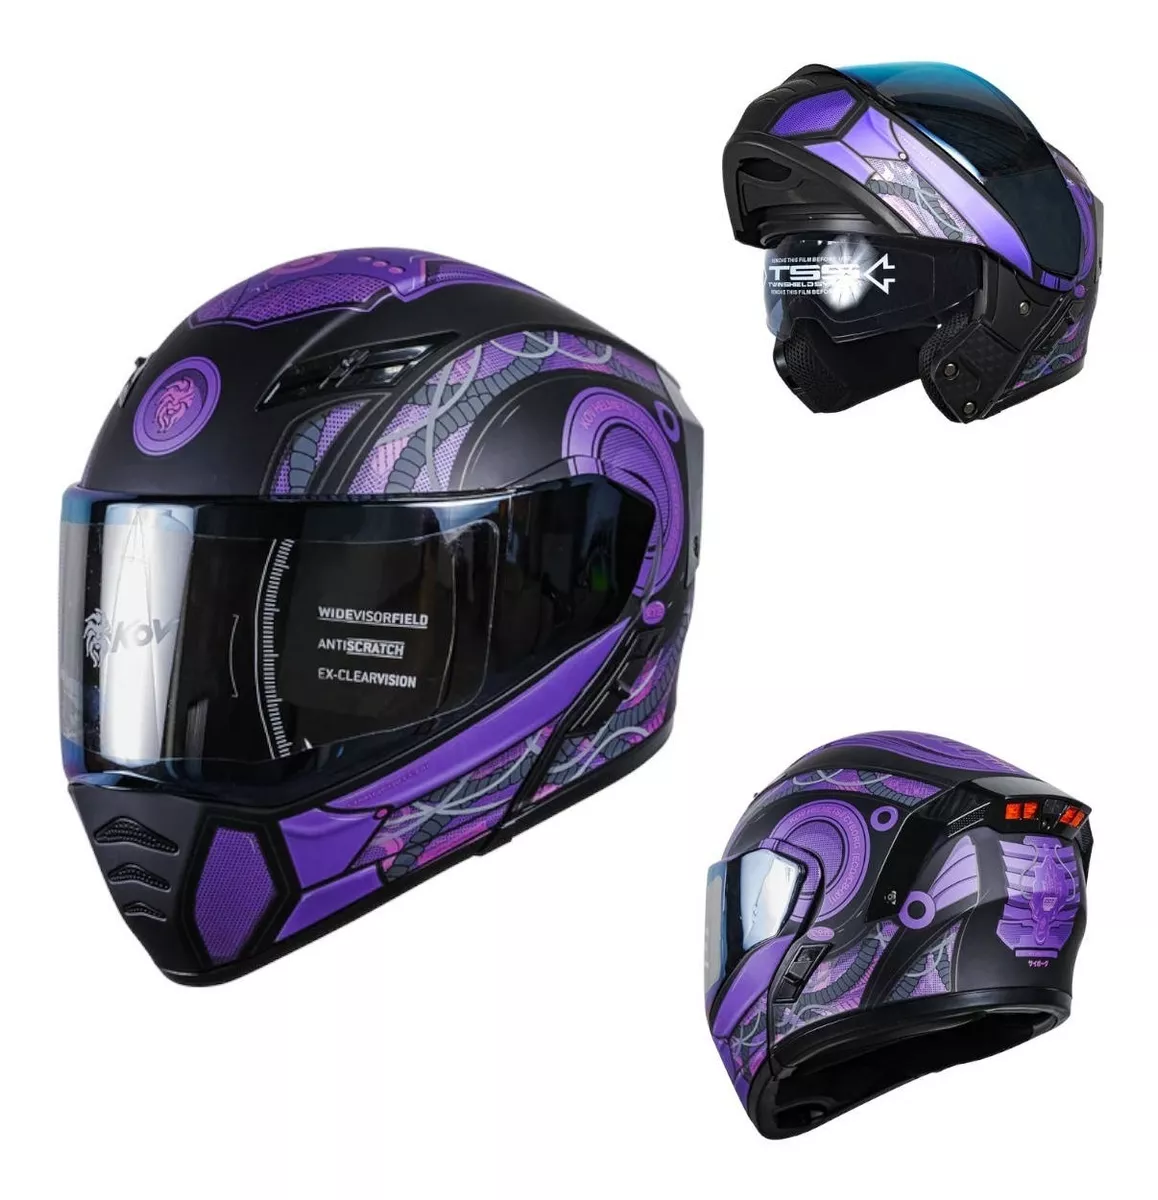 Casco Abatible Kov Cyborg Morado Para Moto Ceritificado Dot Color Violeta Tamaño Del Casco L (59-60cm)